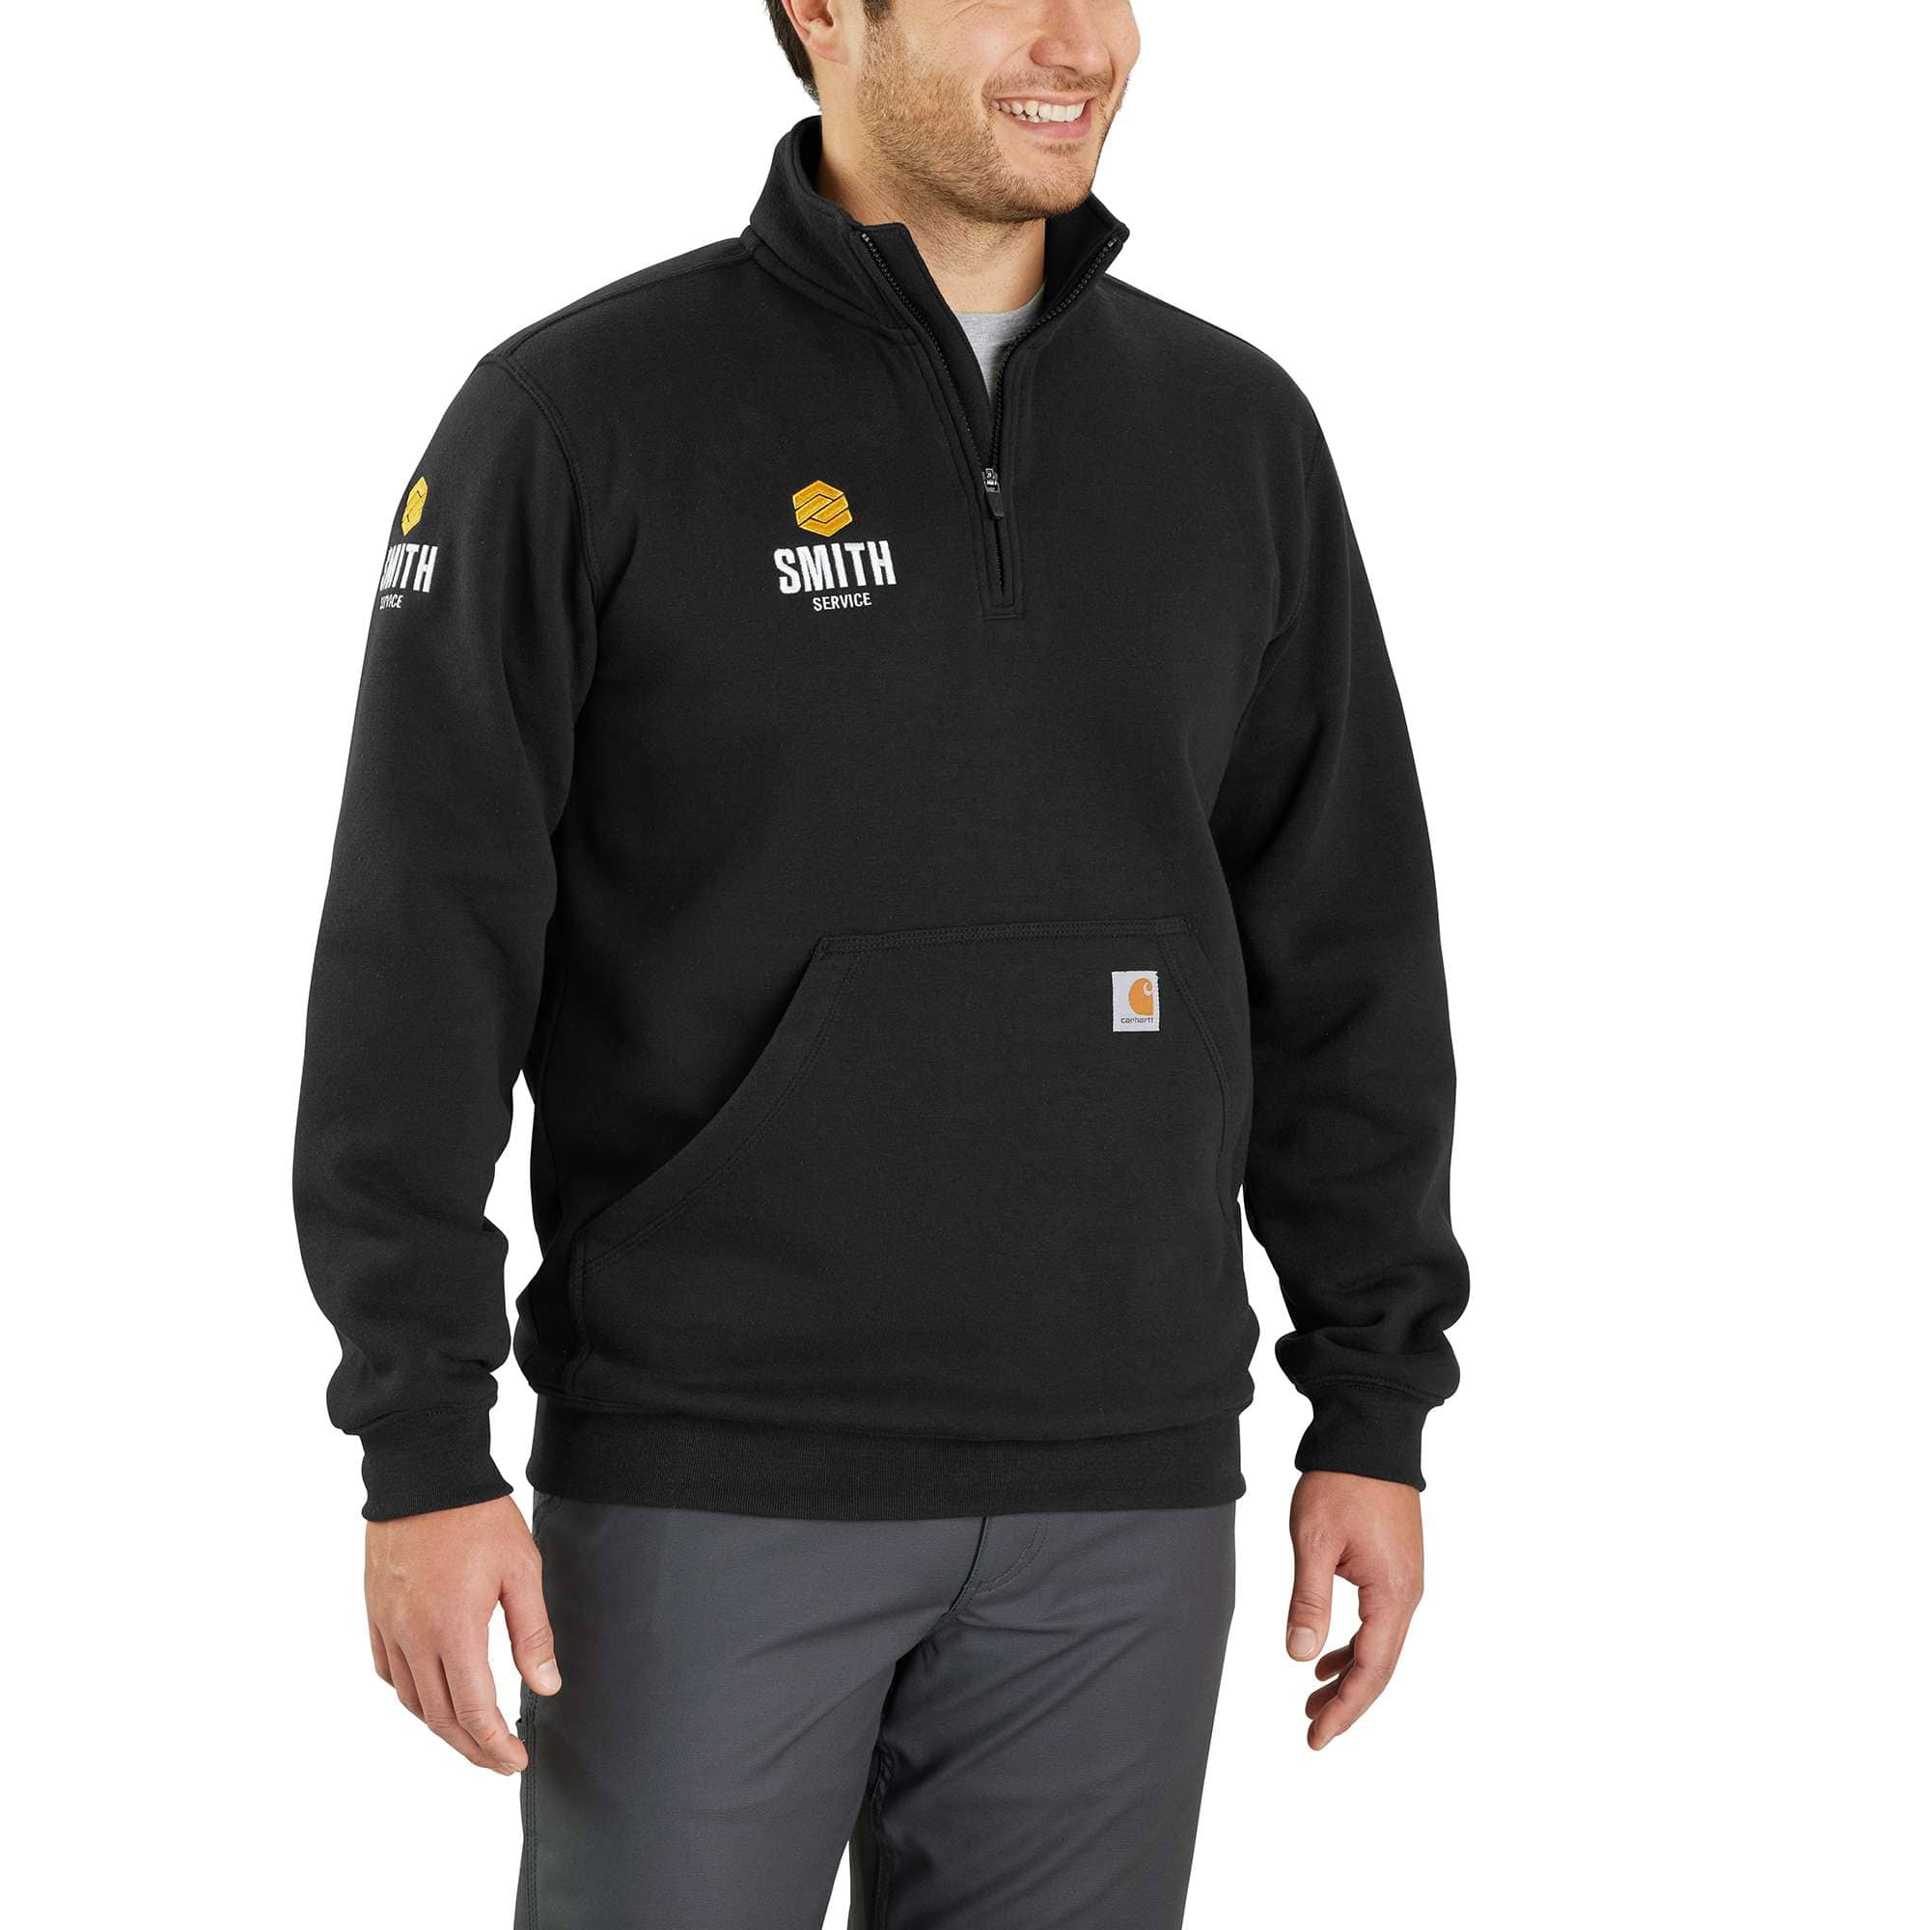 Men's Hoodies & Sweatshirts | Carhartt Company Gear